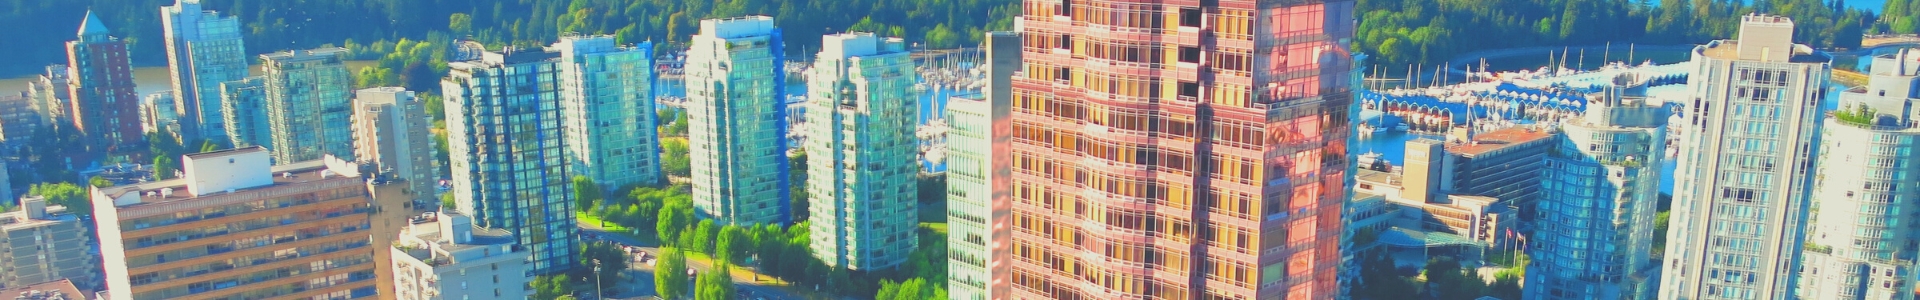 Skyline Shot of Vancouver